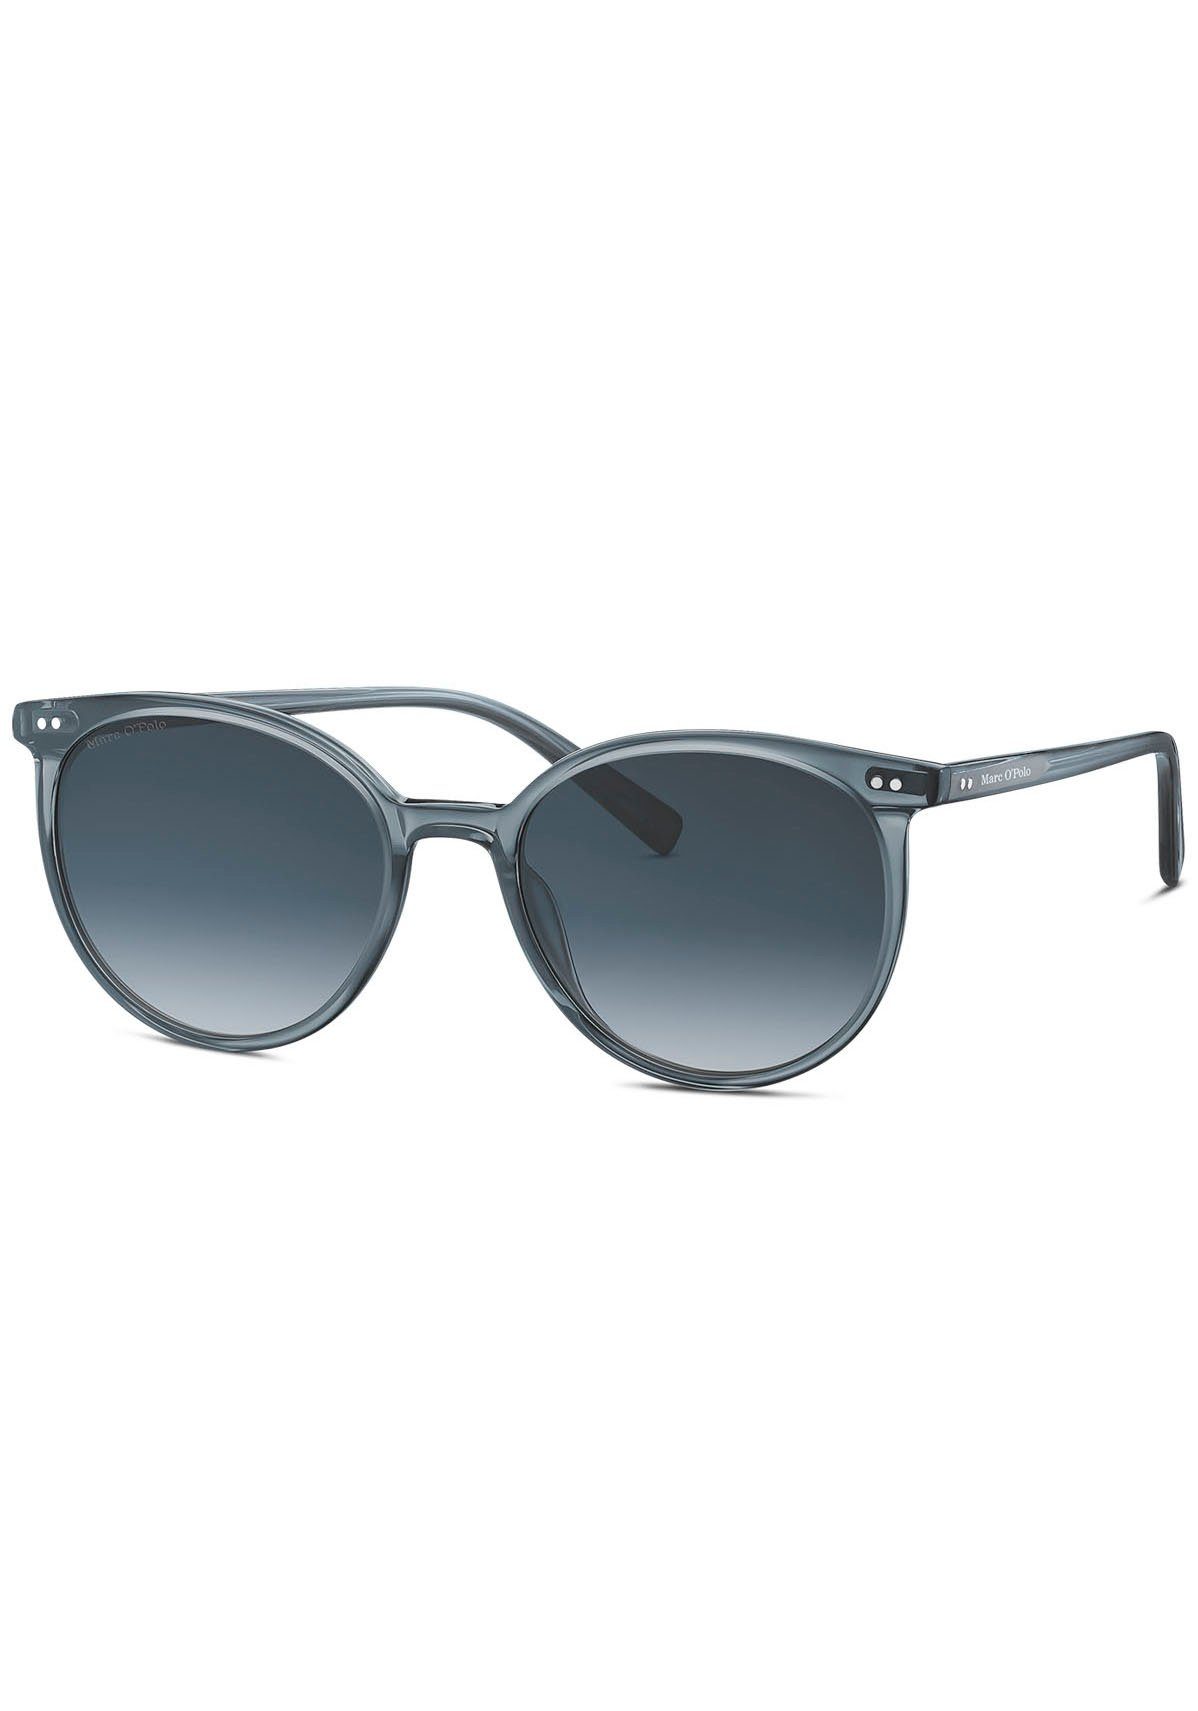 Marc O'Polo Sonnenbrille Modell 506164 Panto-Form grau